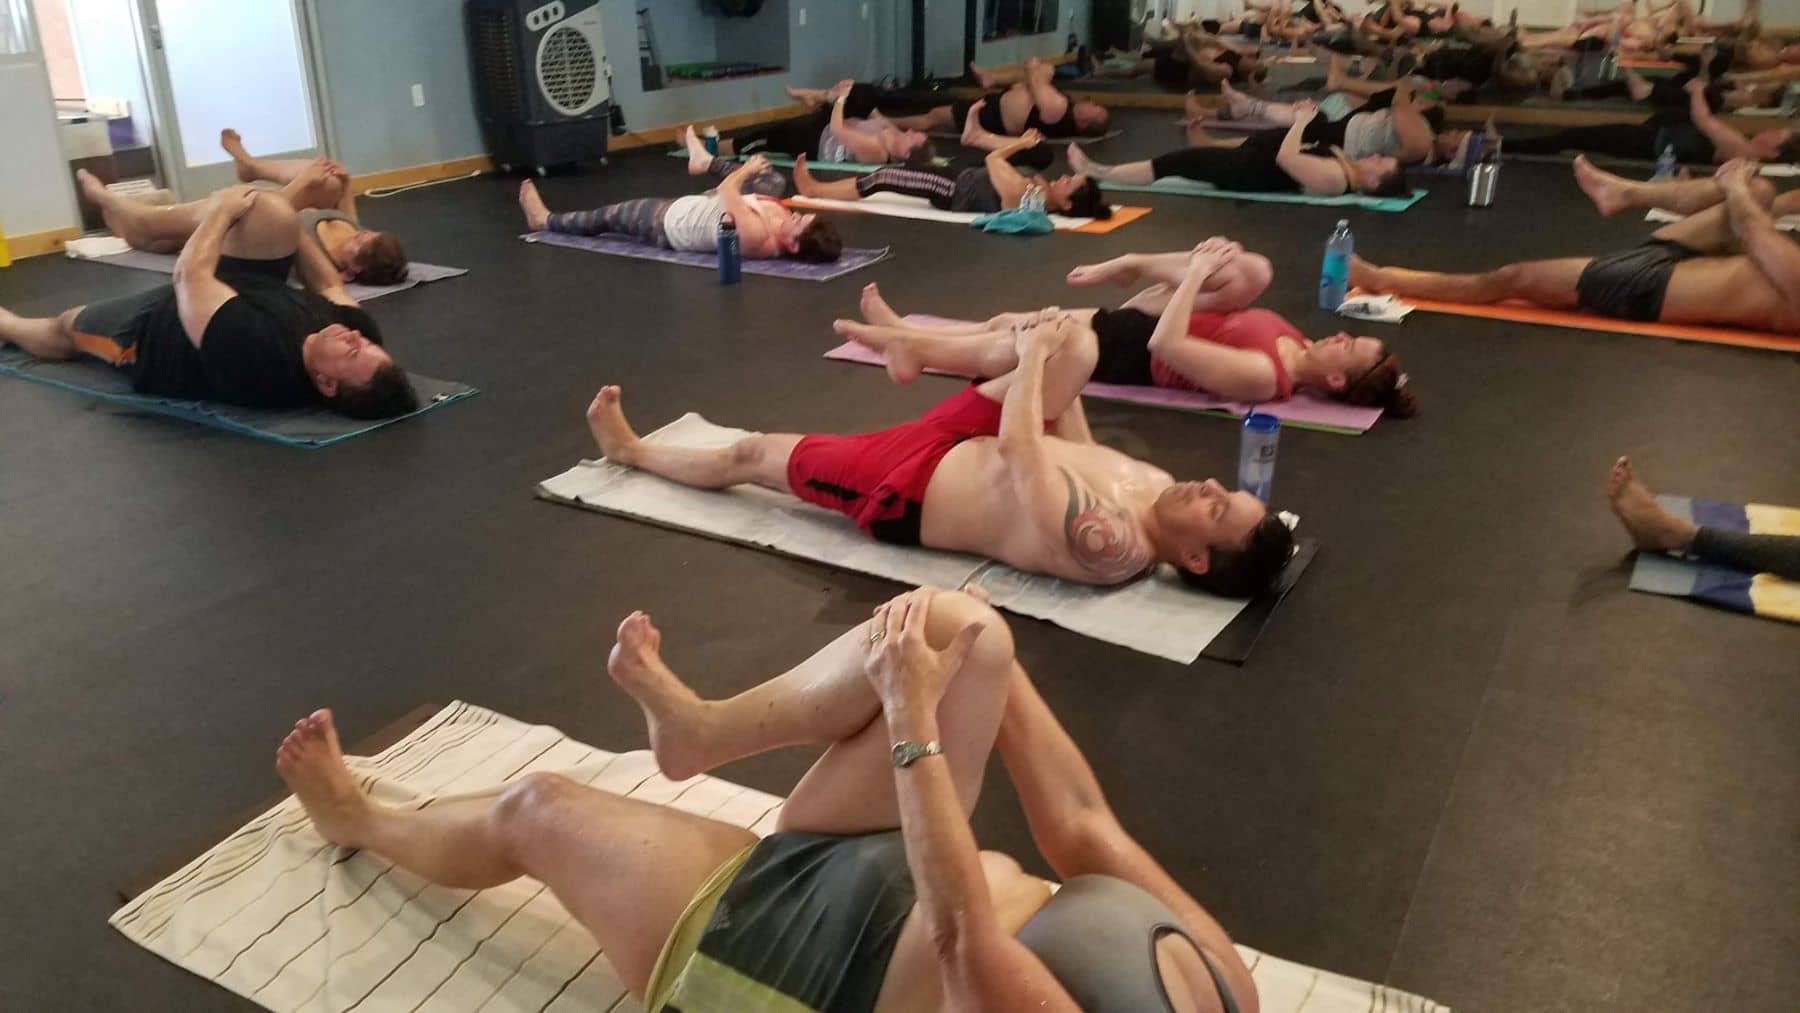 Hot Yoga Studio in Santa Clarita Hot For Yoga